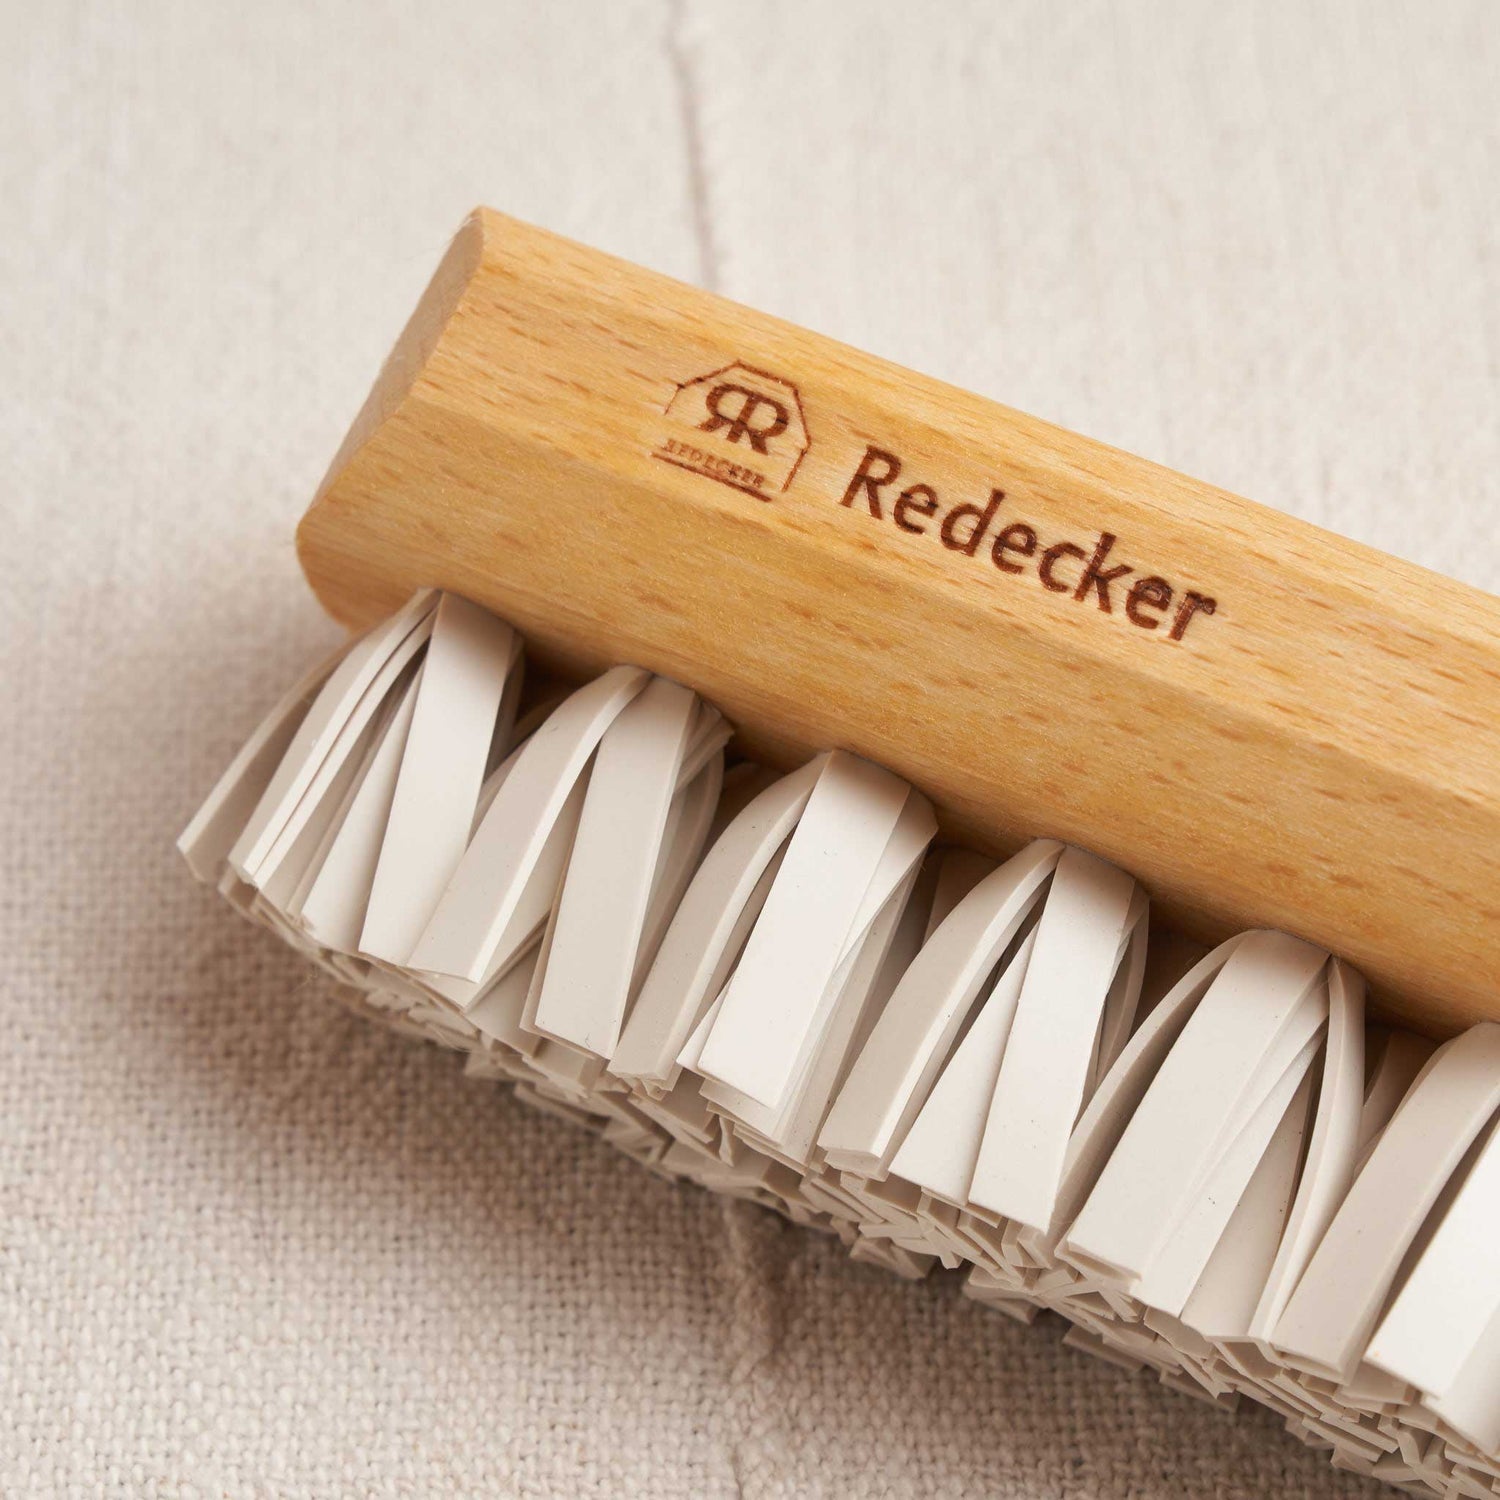 Redecker Laundry Brush: Official Stockist